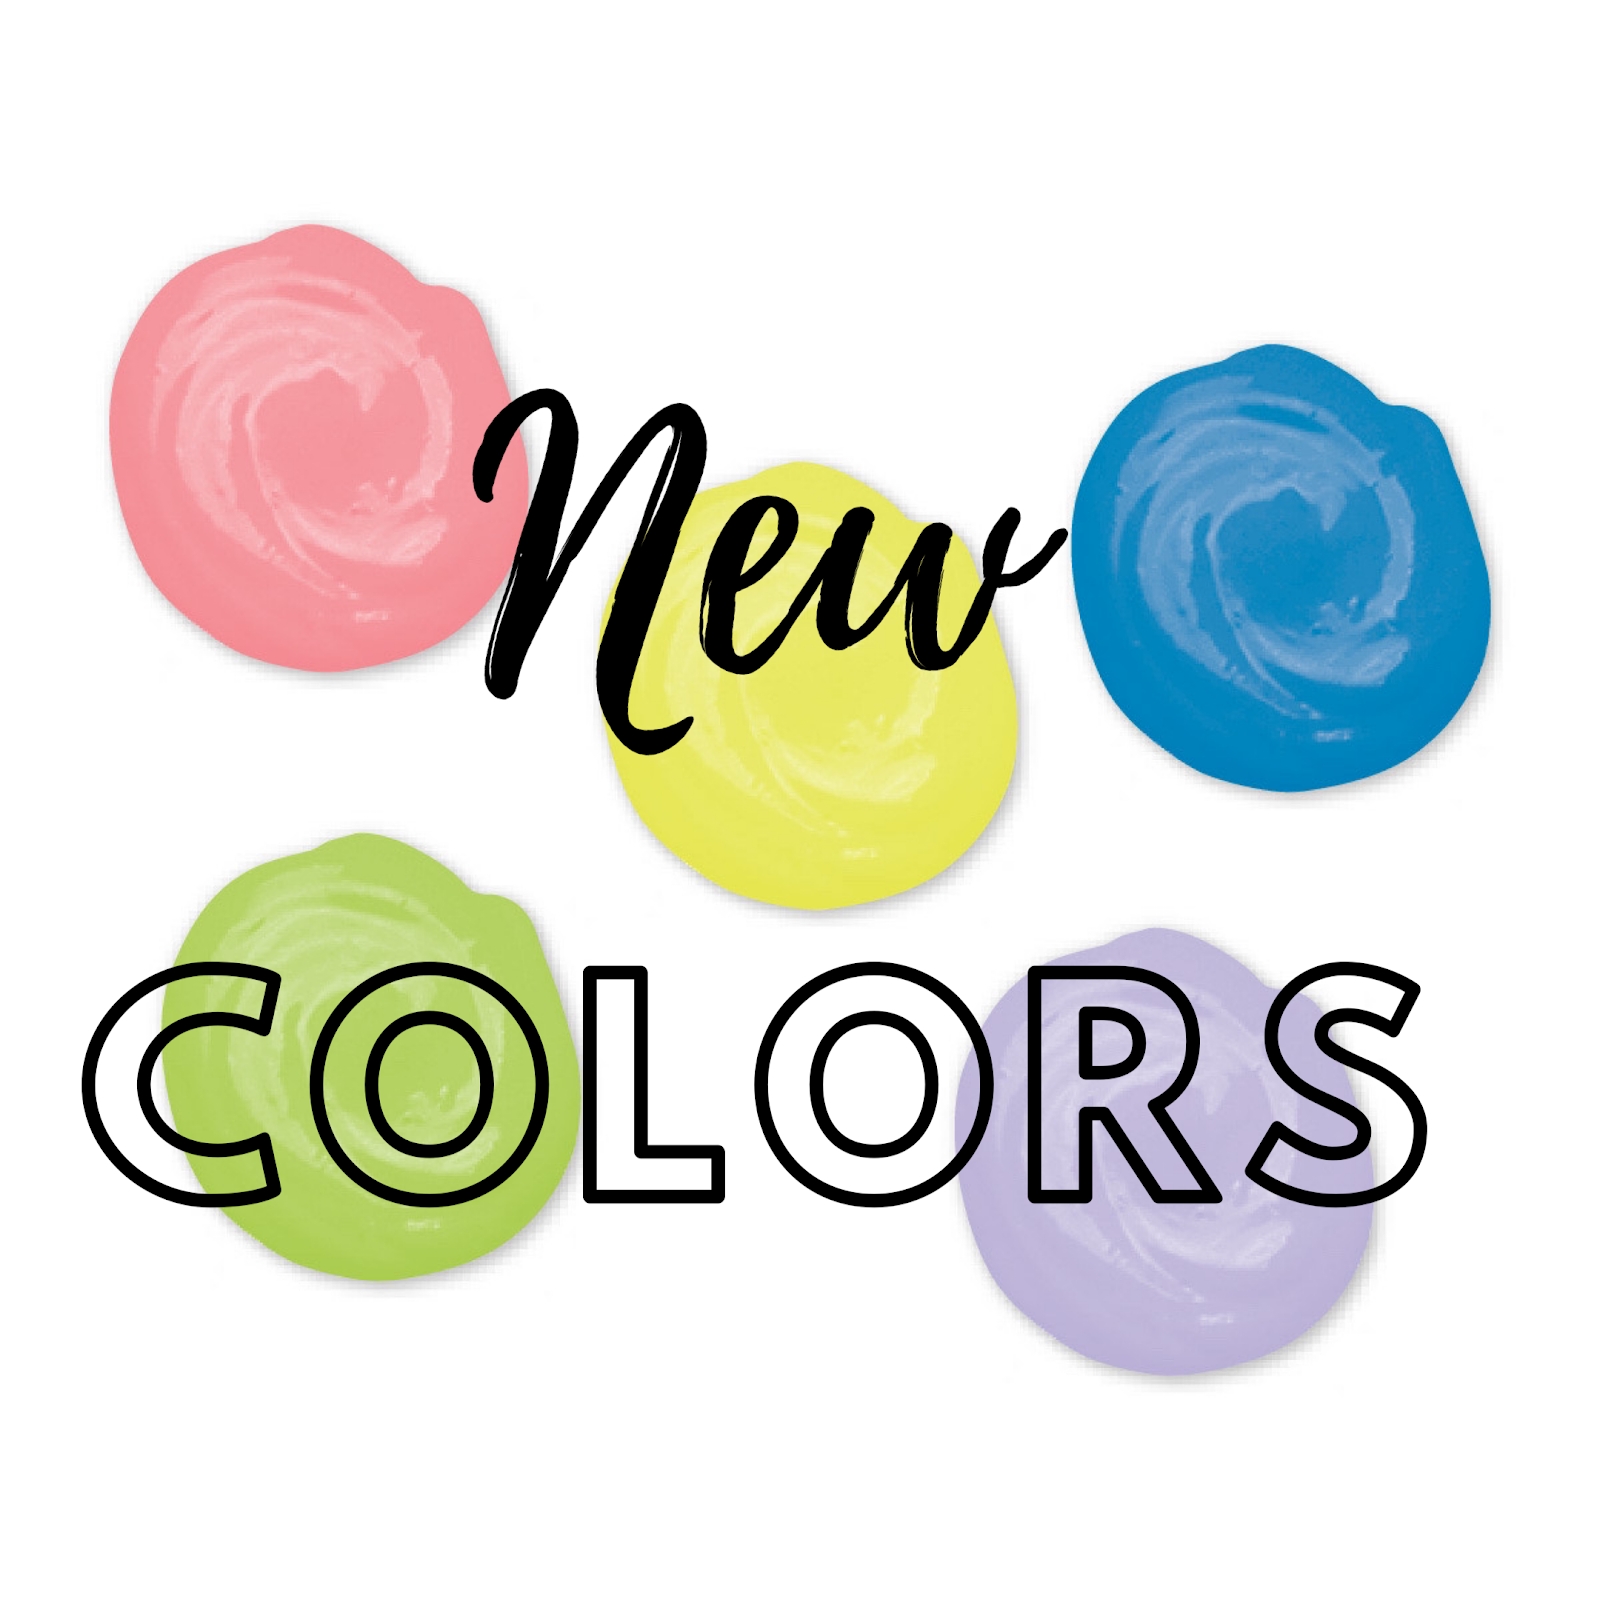 Sara Nicole Designs: What is Chalk Paste? Plus my favorite 5 Paste colors!